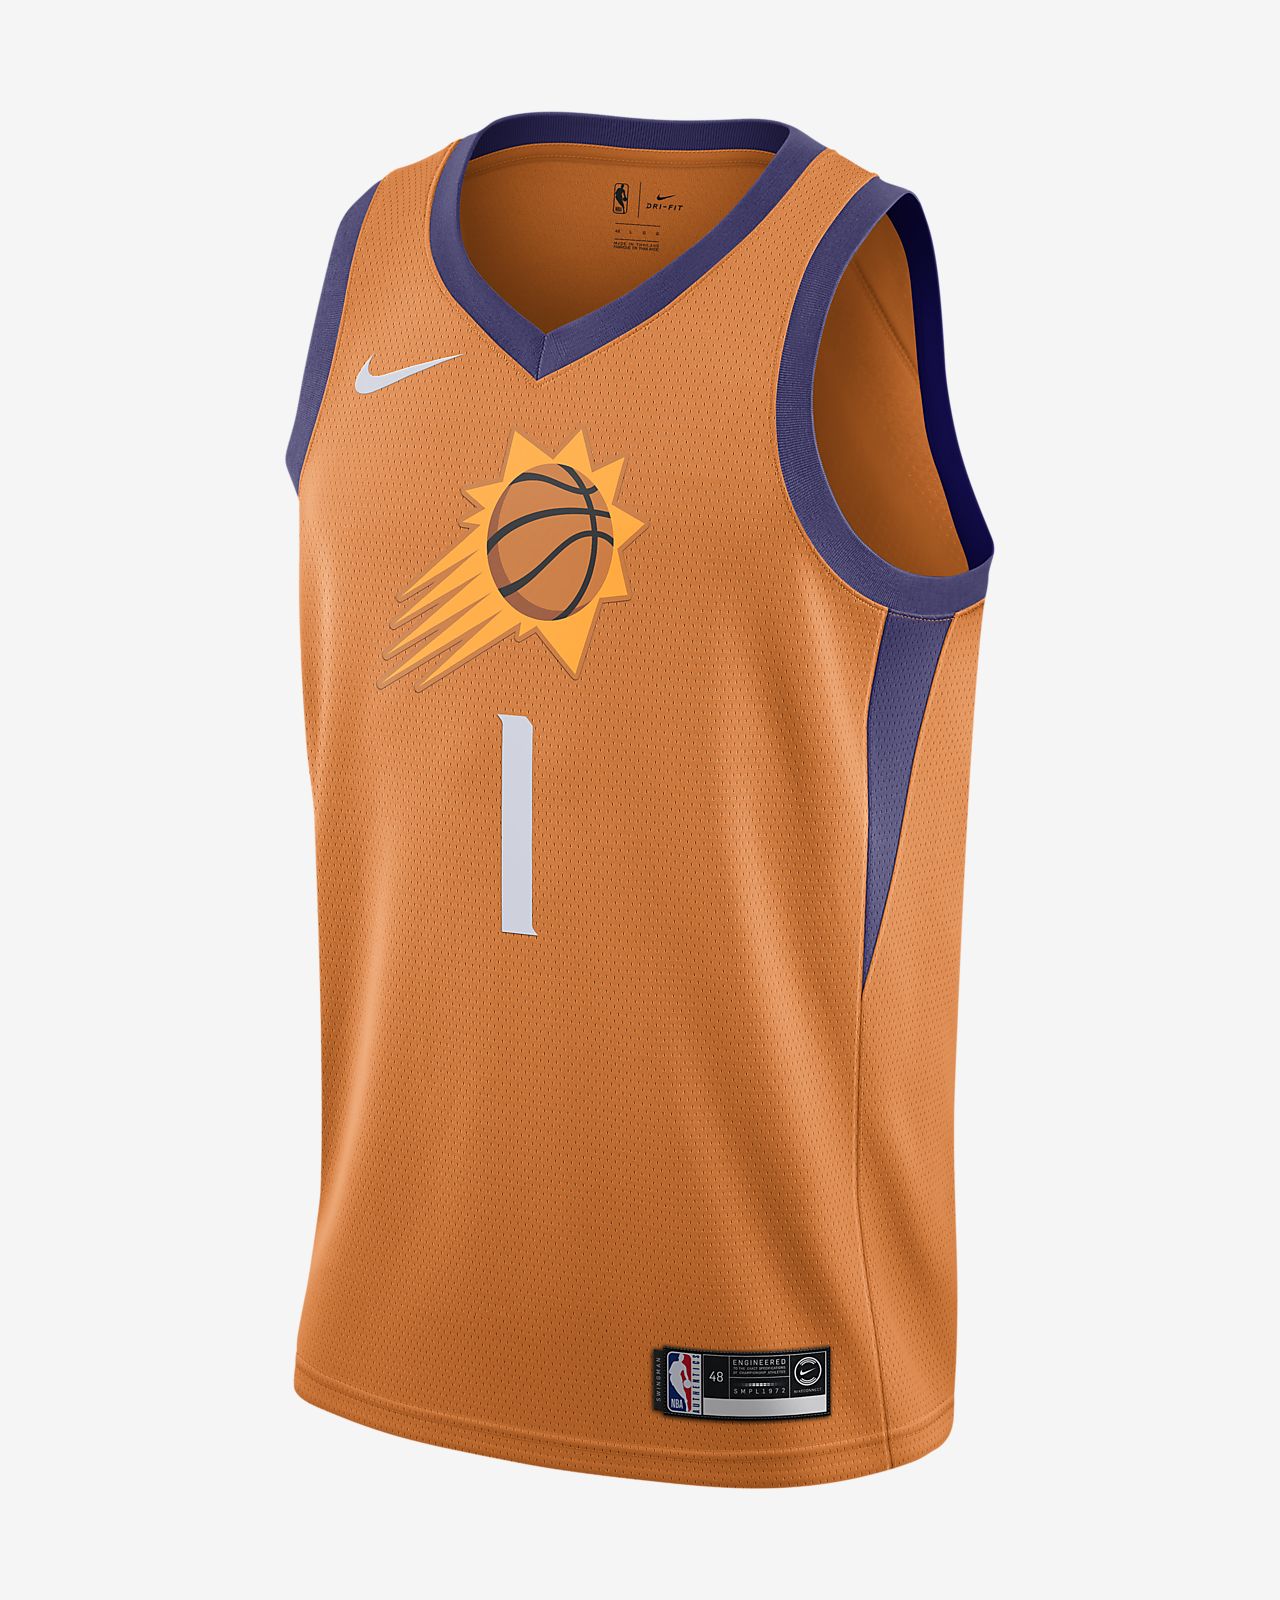 菲尼克斯太阳队 (Devin Booker) Icon Edition Nike NBA Jersey 男子球衣-NIKE 中文官方网站